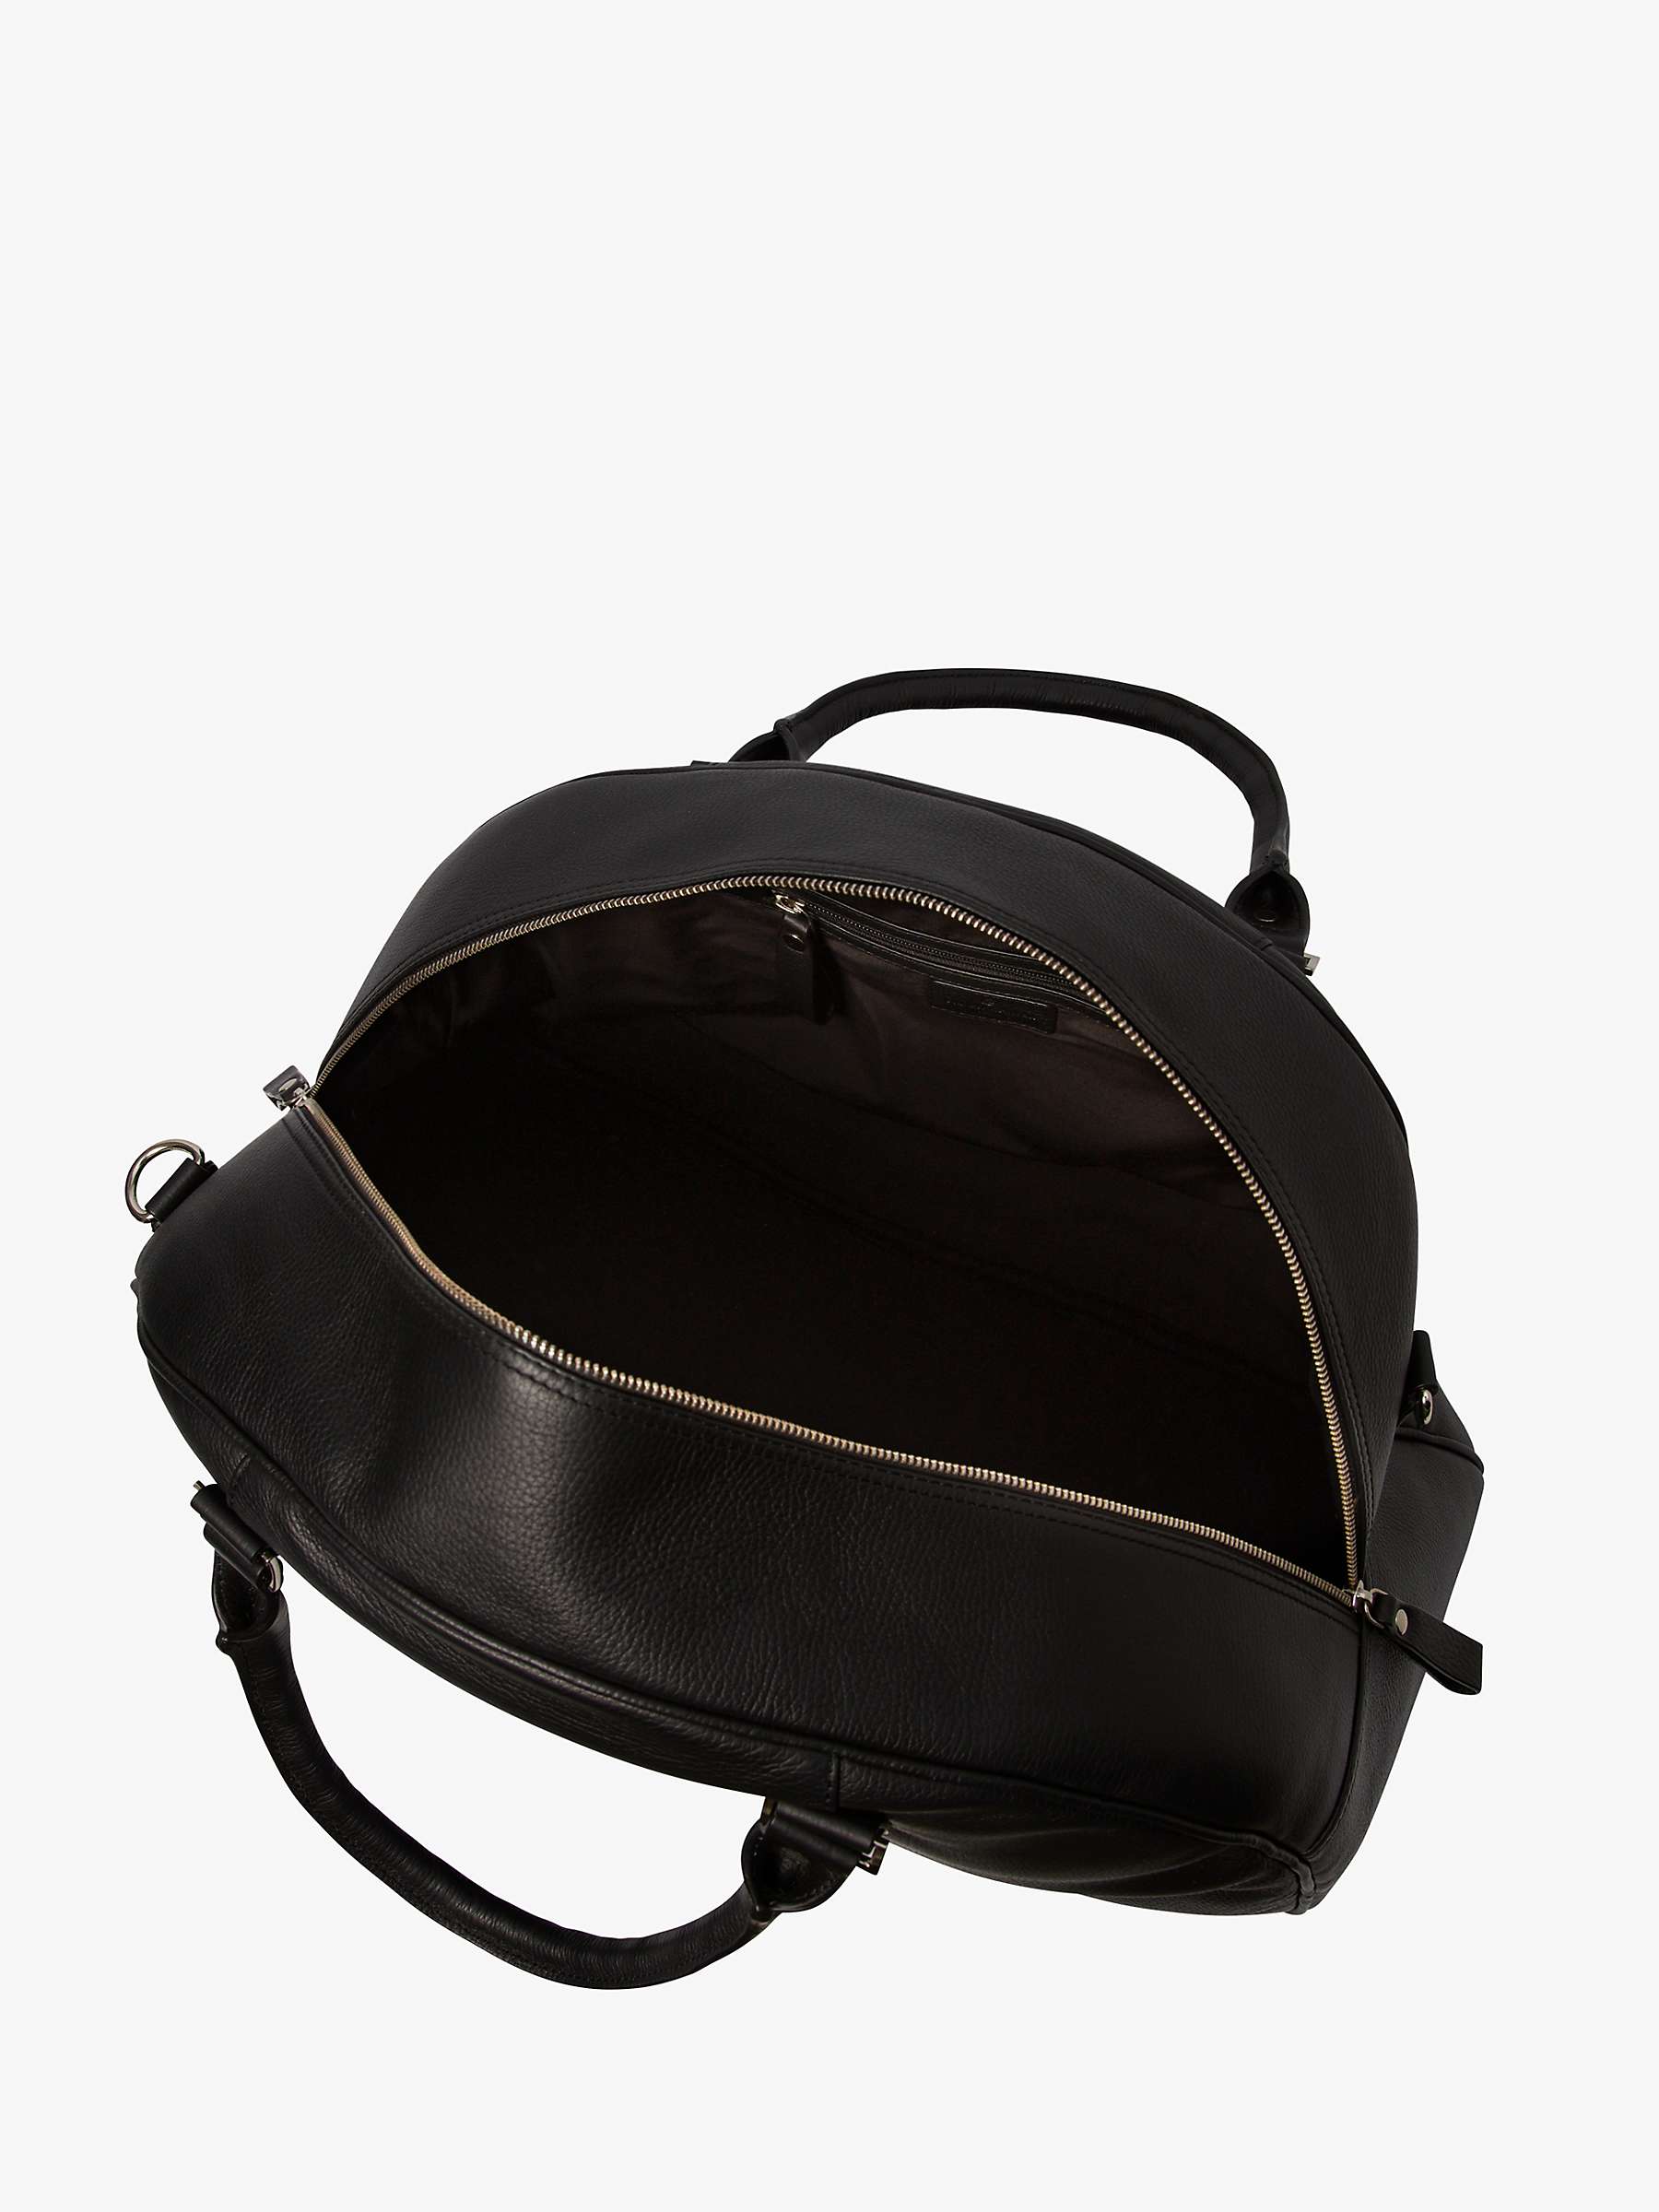 Buy Simon Carter Folkestone Leather Bag, Black Online at johnlewis.com